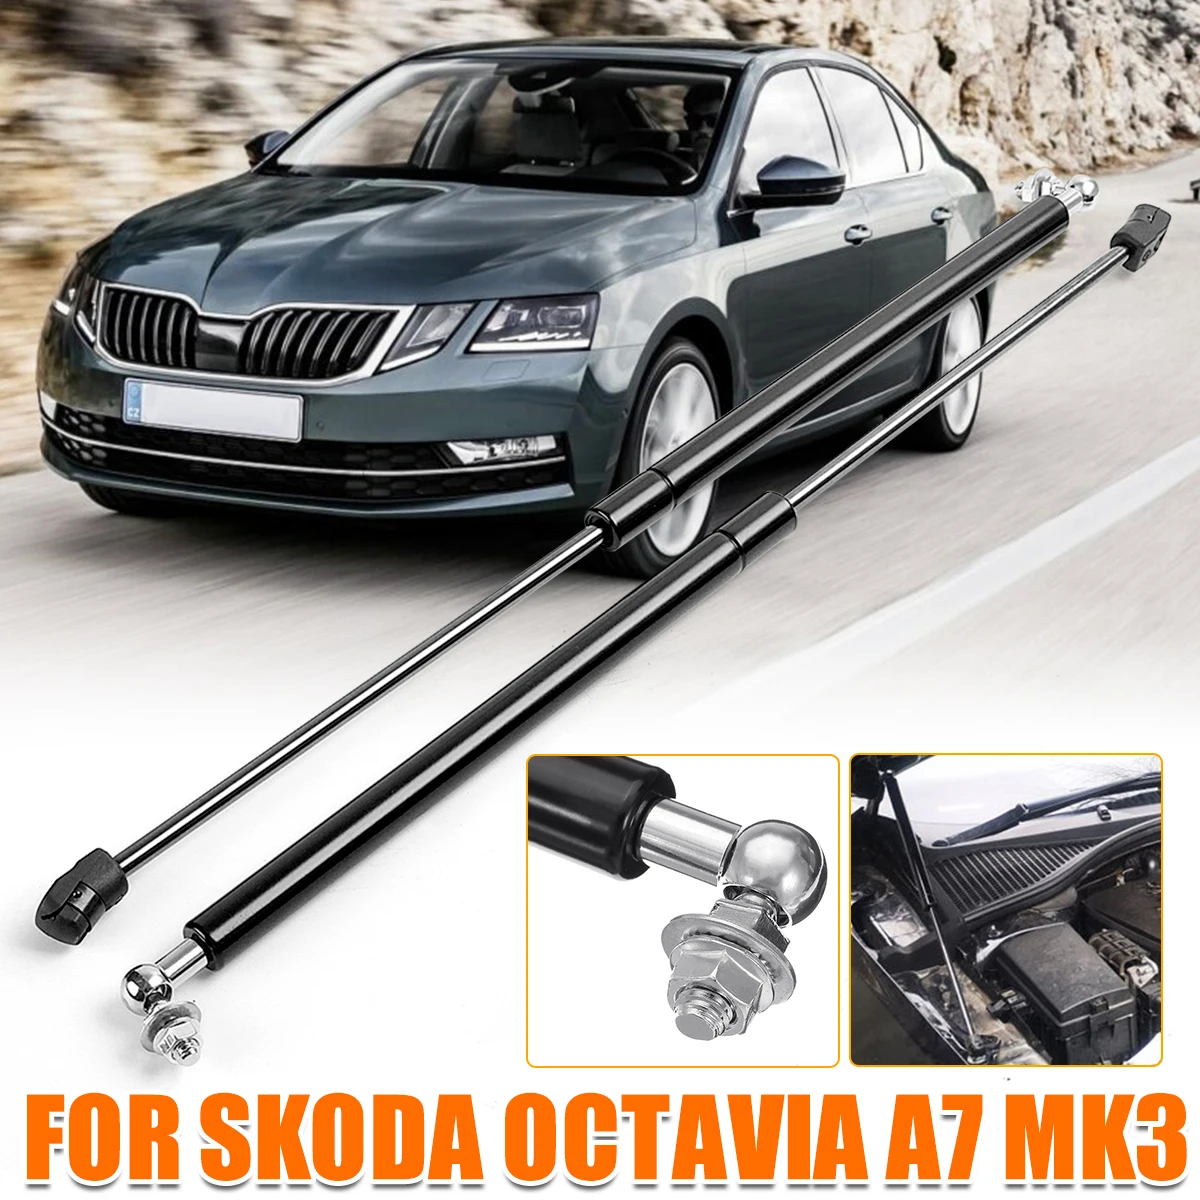 

For 2012-2020 Skoda Octavia A7 MK3 For A5 MK2 2004-2013 Car-Styling Refit Bonnet Hood Gas Shock Lift Strut Bars Support Rod